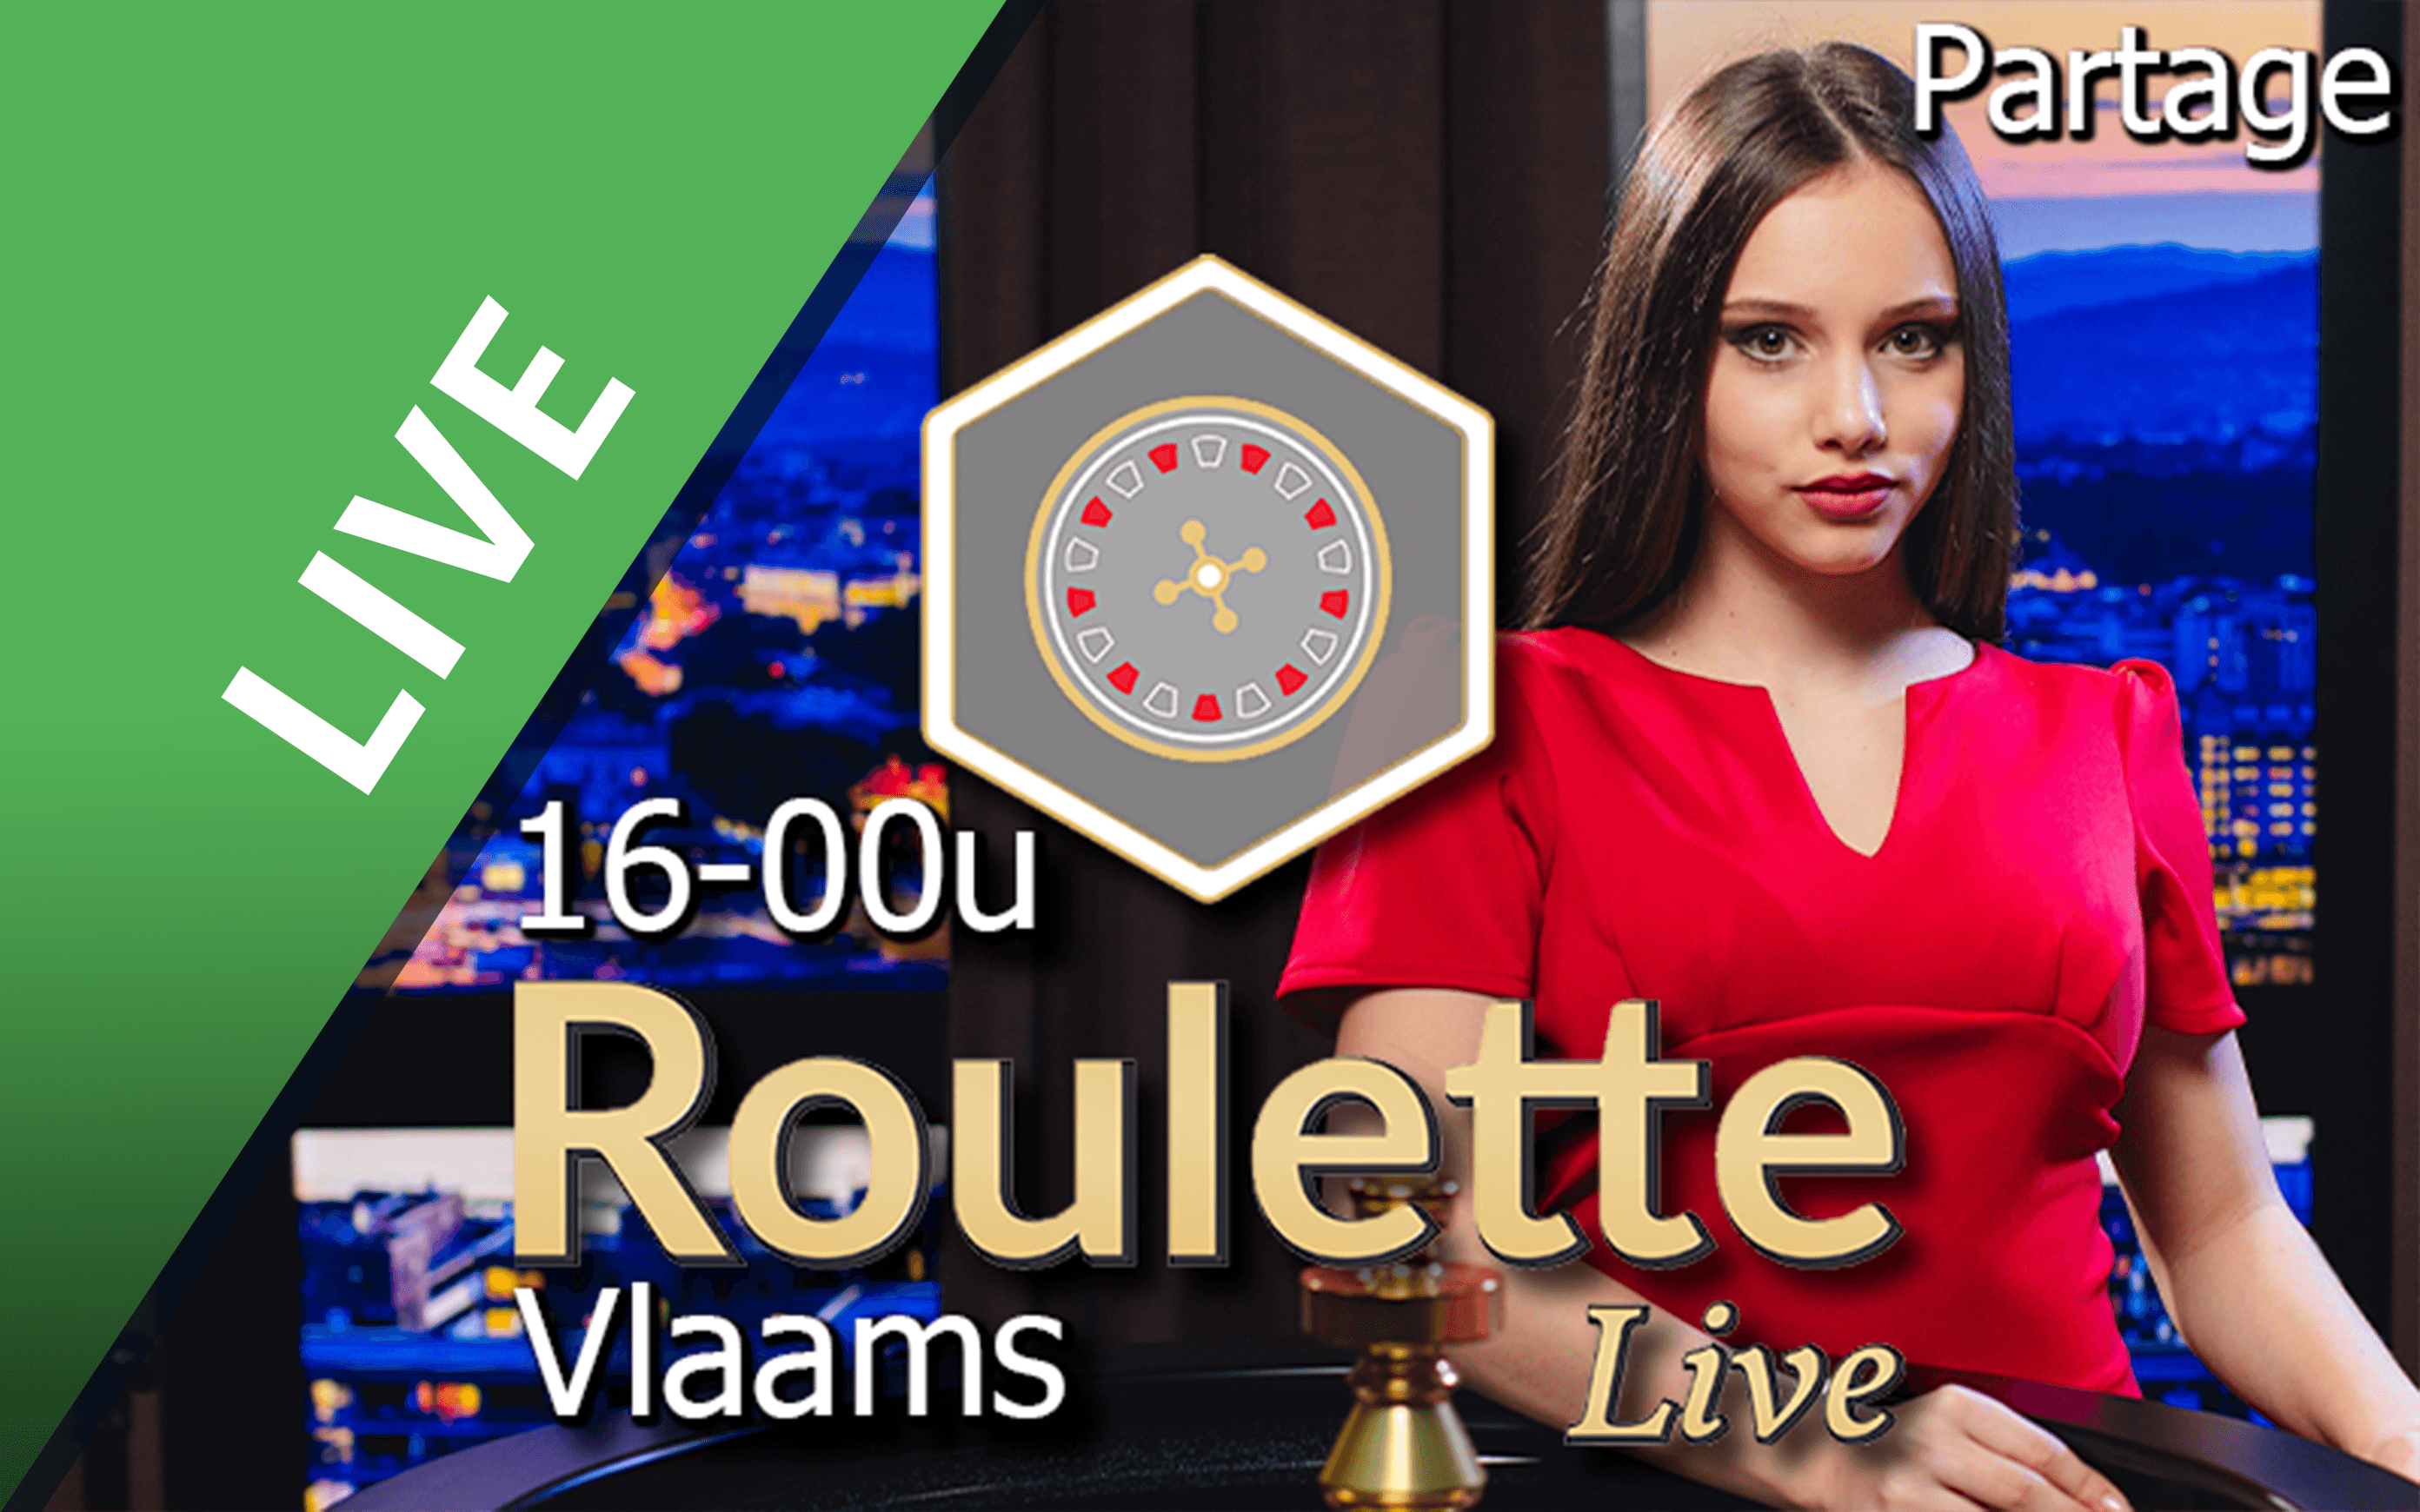 Jogue Vlaamse Roulette Partage no casino online Starcasino.be 